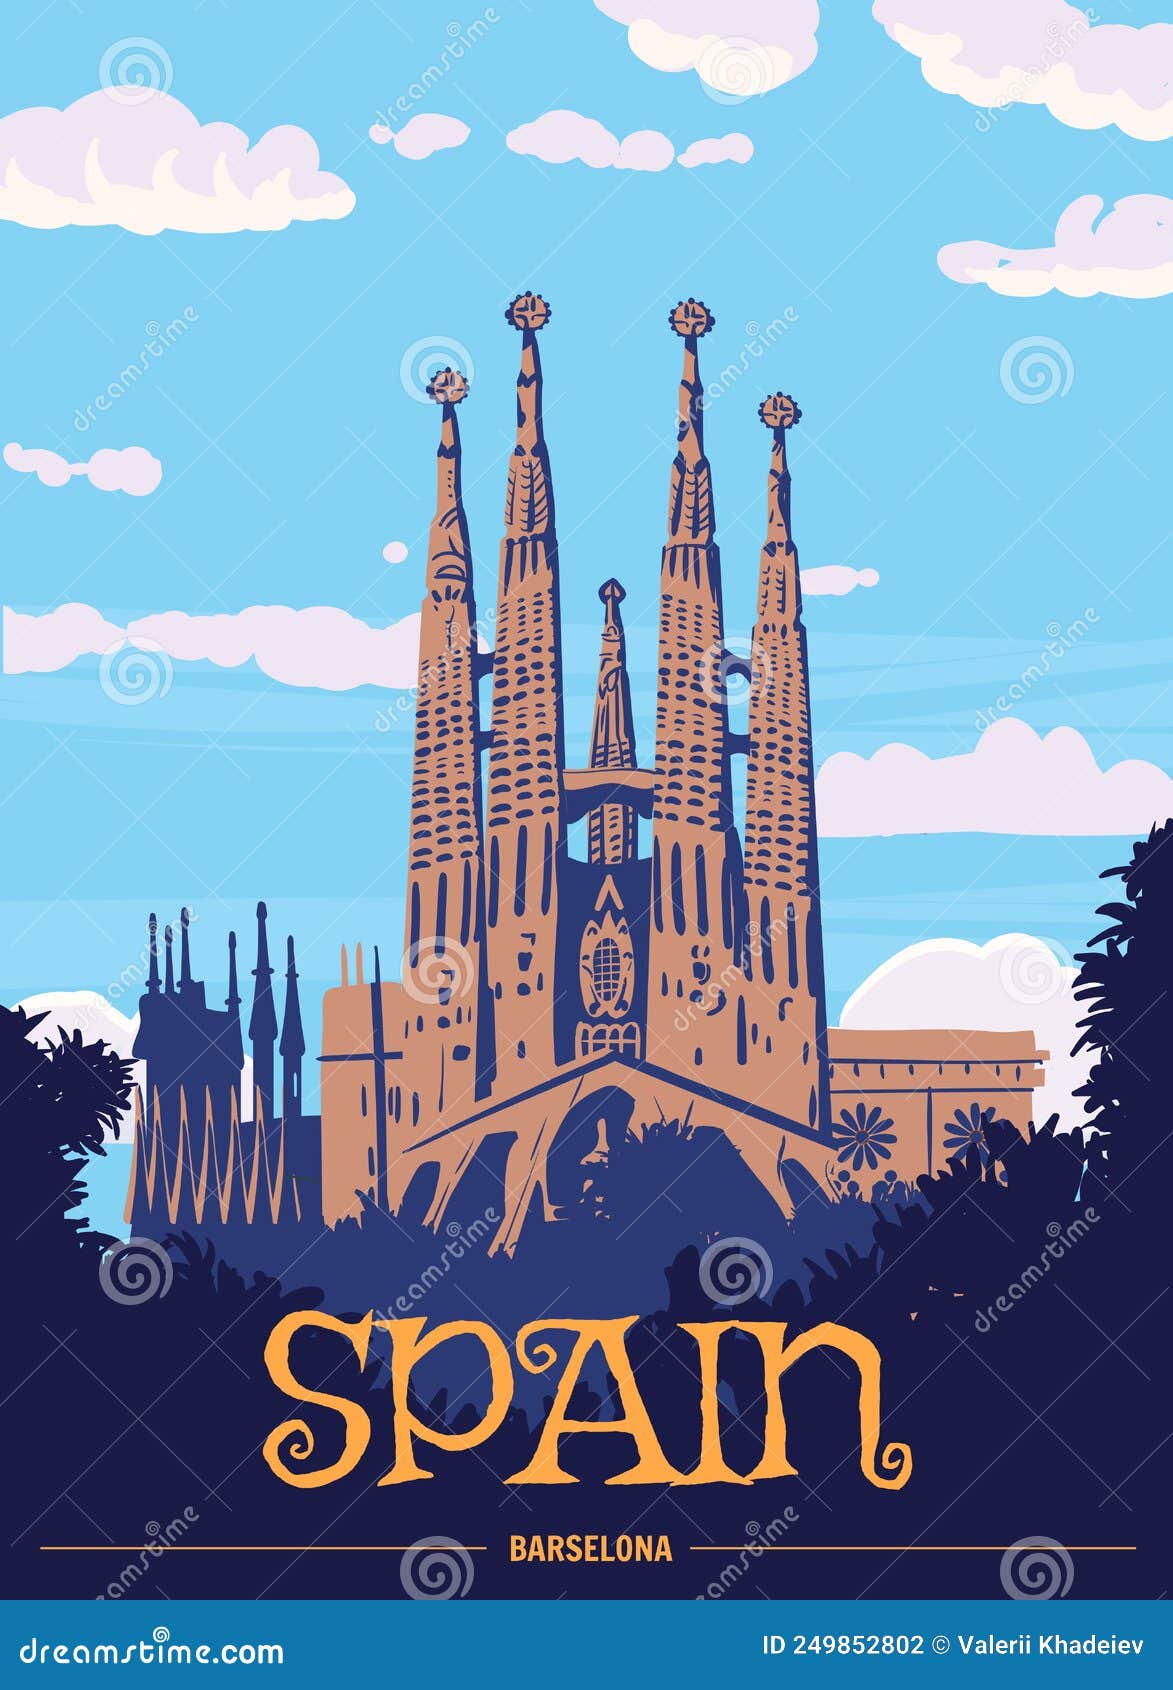 travel poster spain, barcelona vintage. sagrada familia gaudi basilica of spain, sunset sky.  